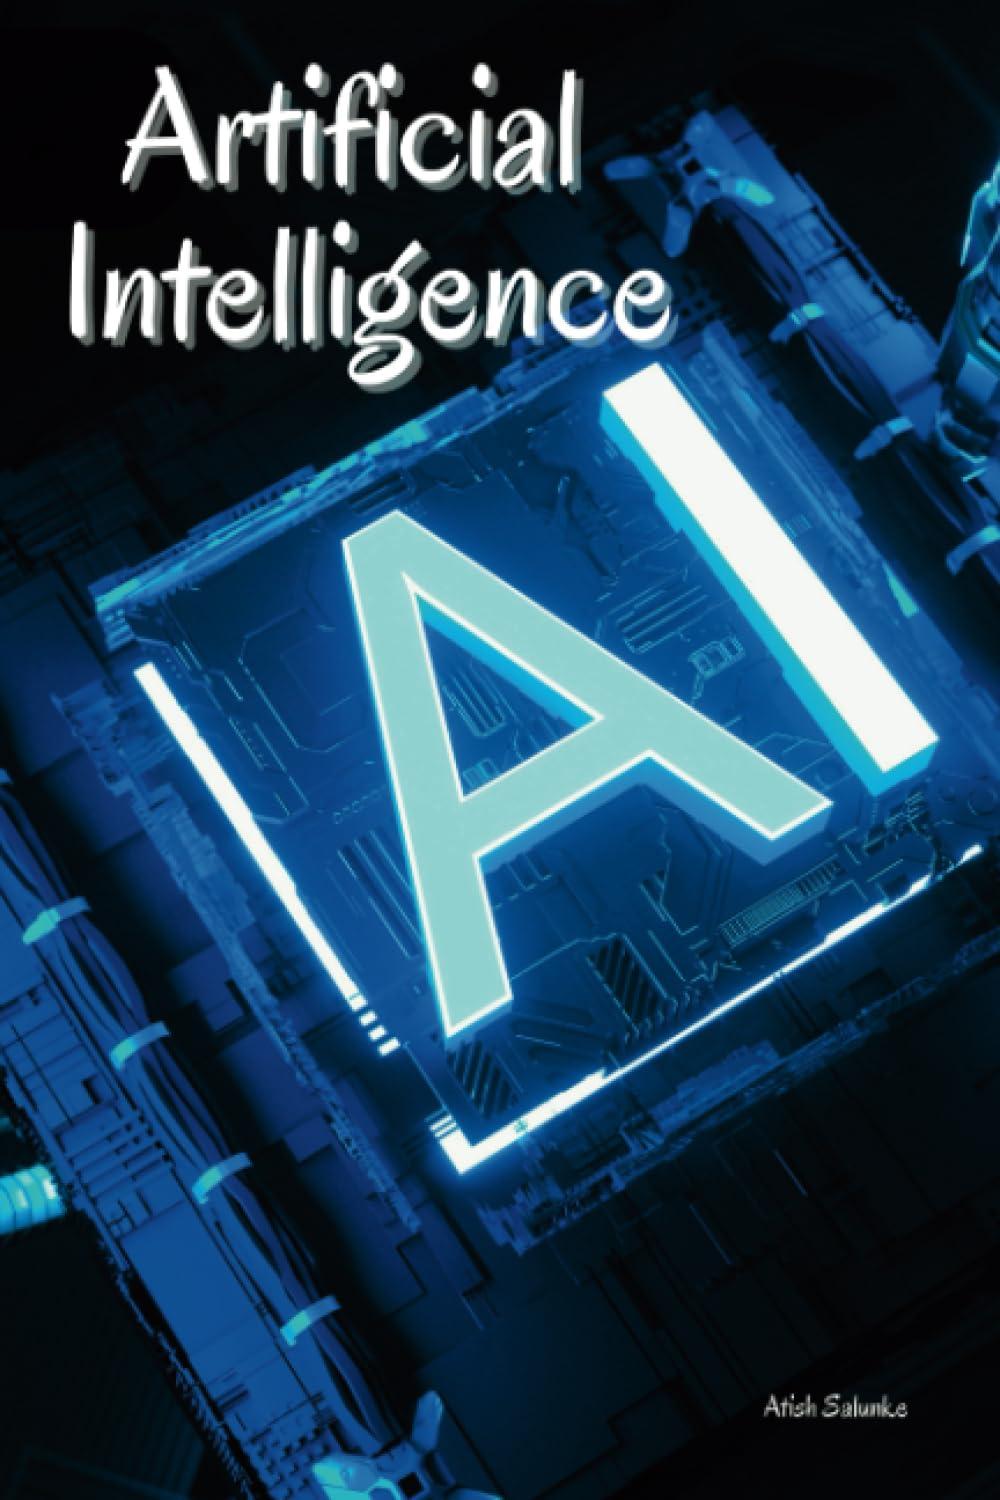 artificial intelligence 1st edition atish salunke 979-8850469740, b0c9s54r9z